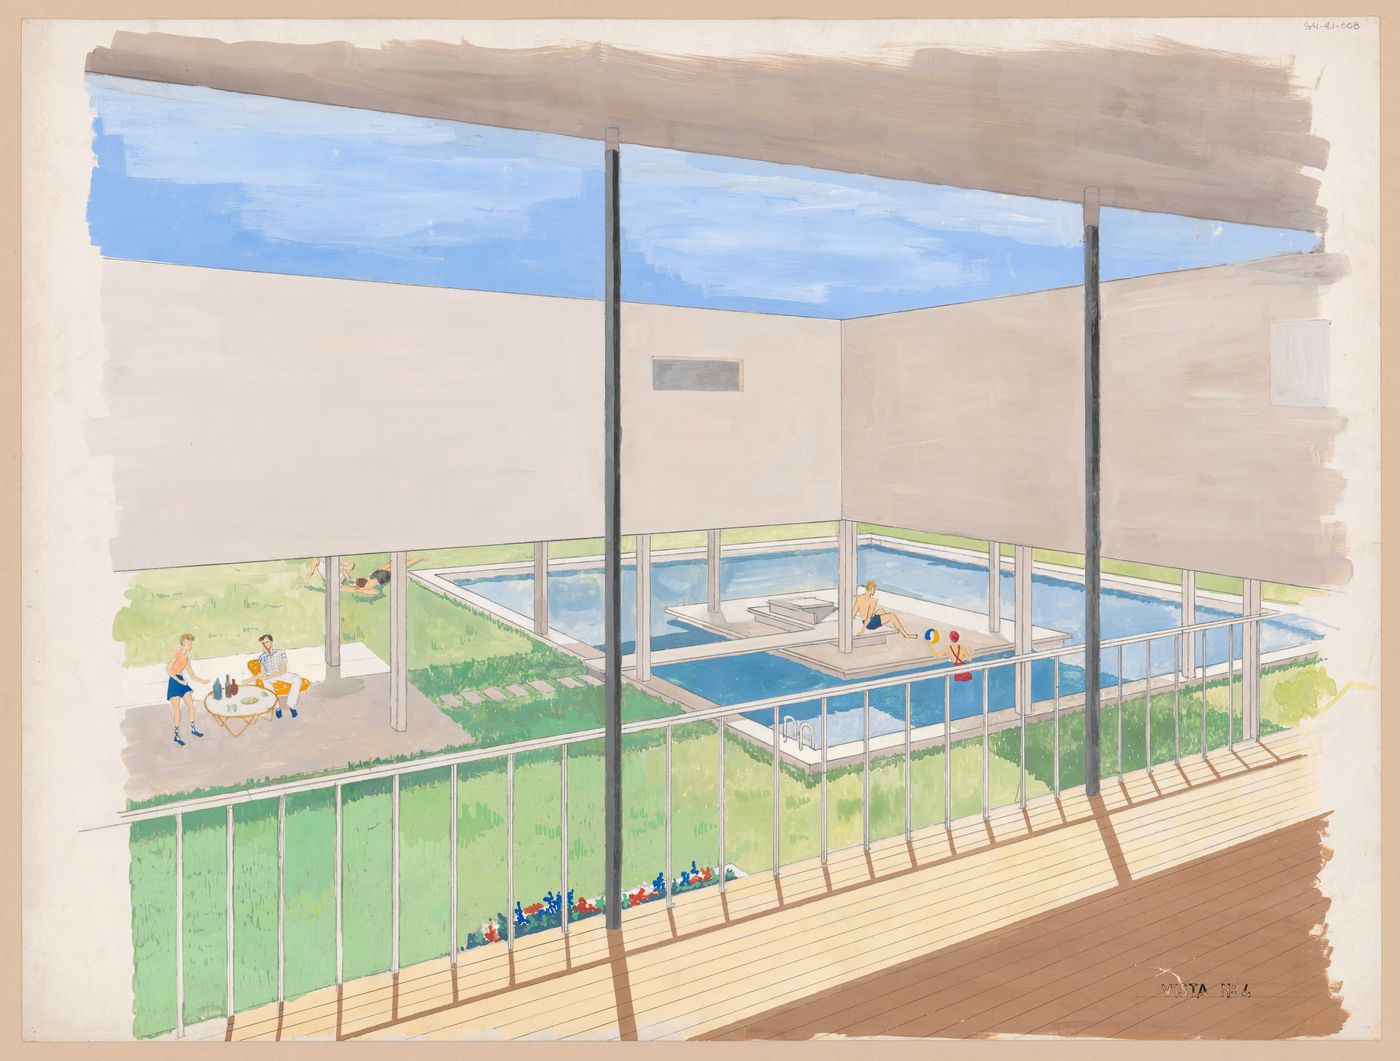 Perspective drawing showing interior court with pool and terrace for Casa en el Parque Pereyra Iraola, Mar del Plata, Argentina